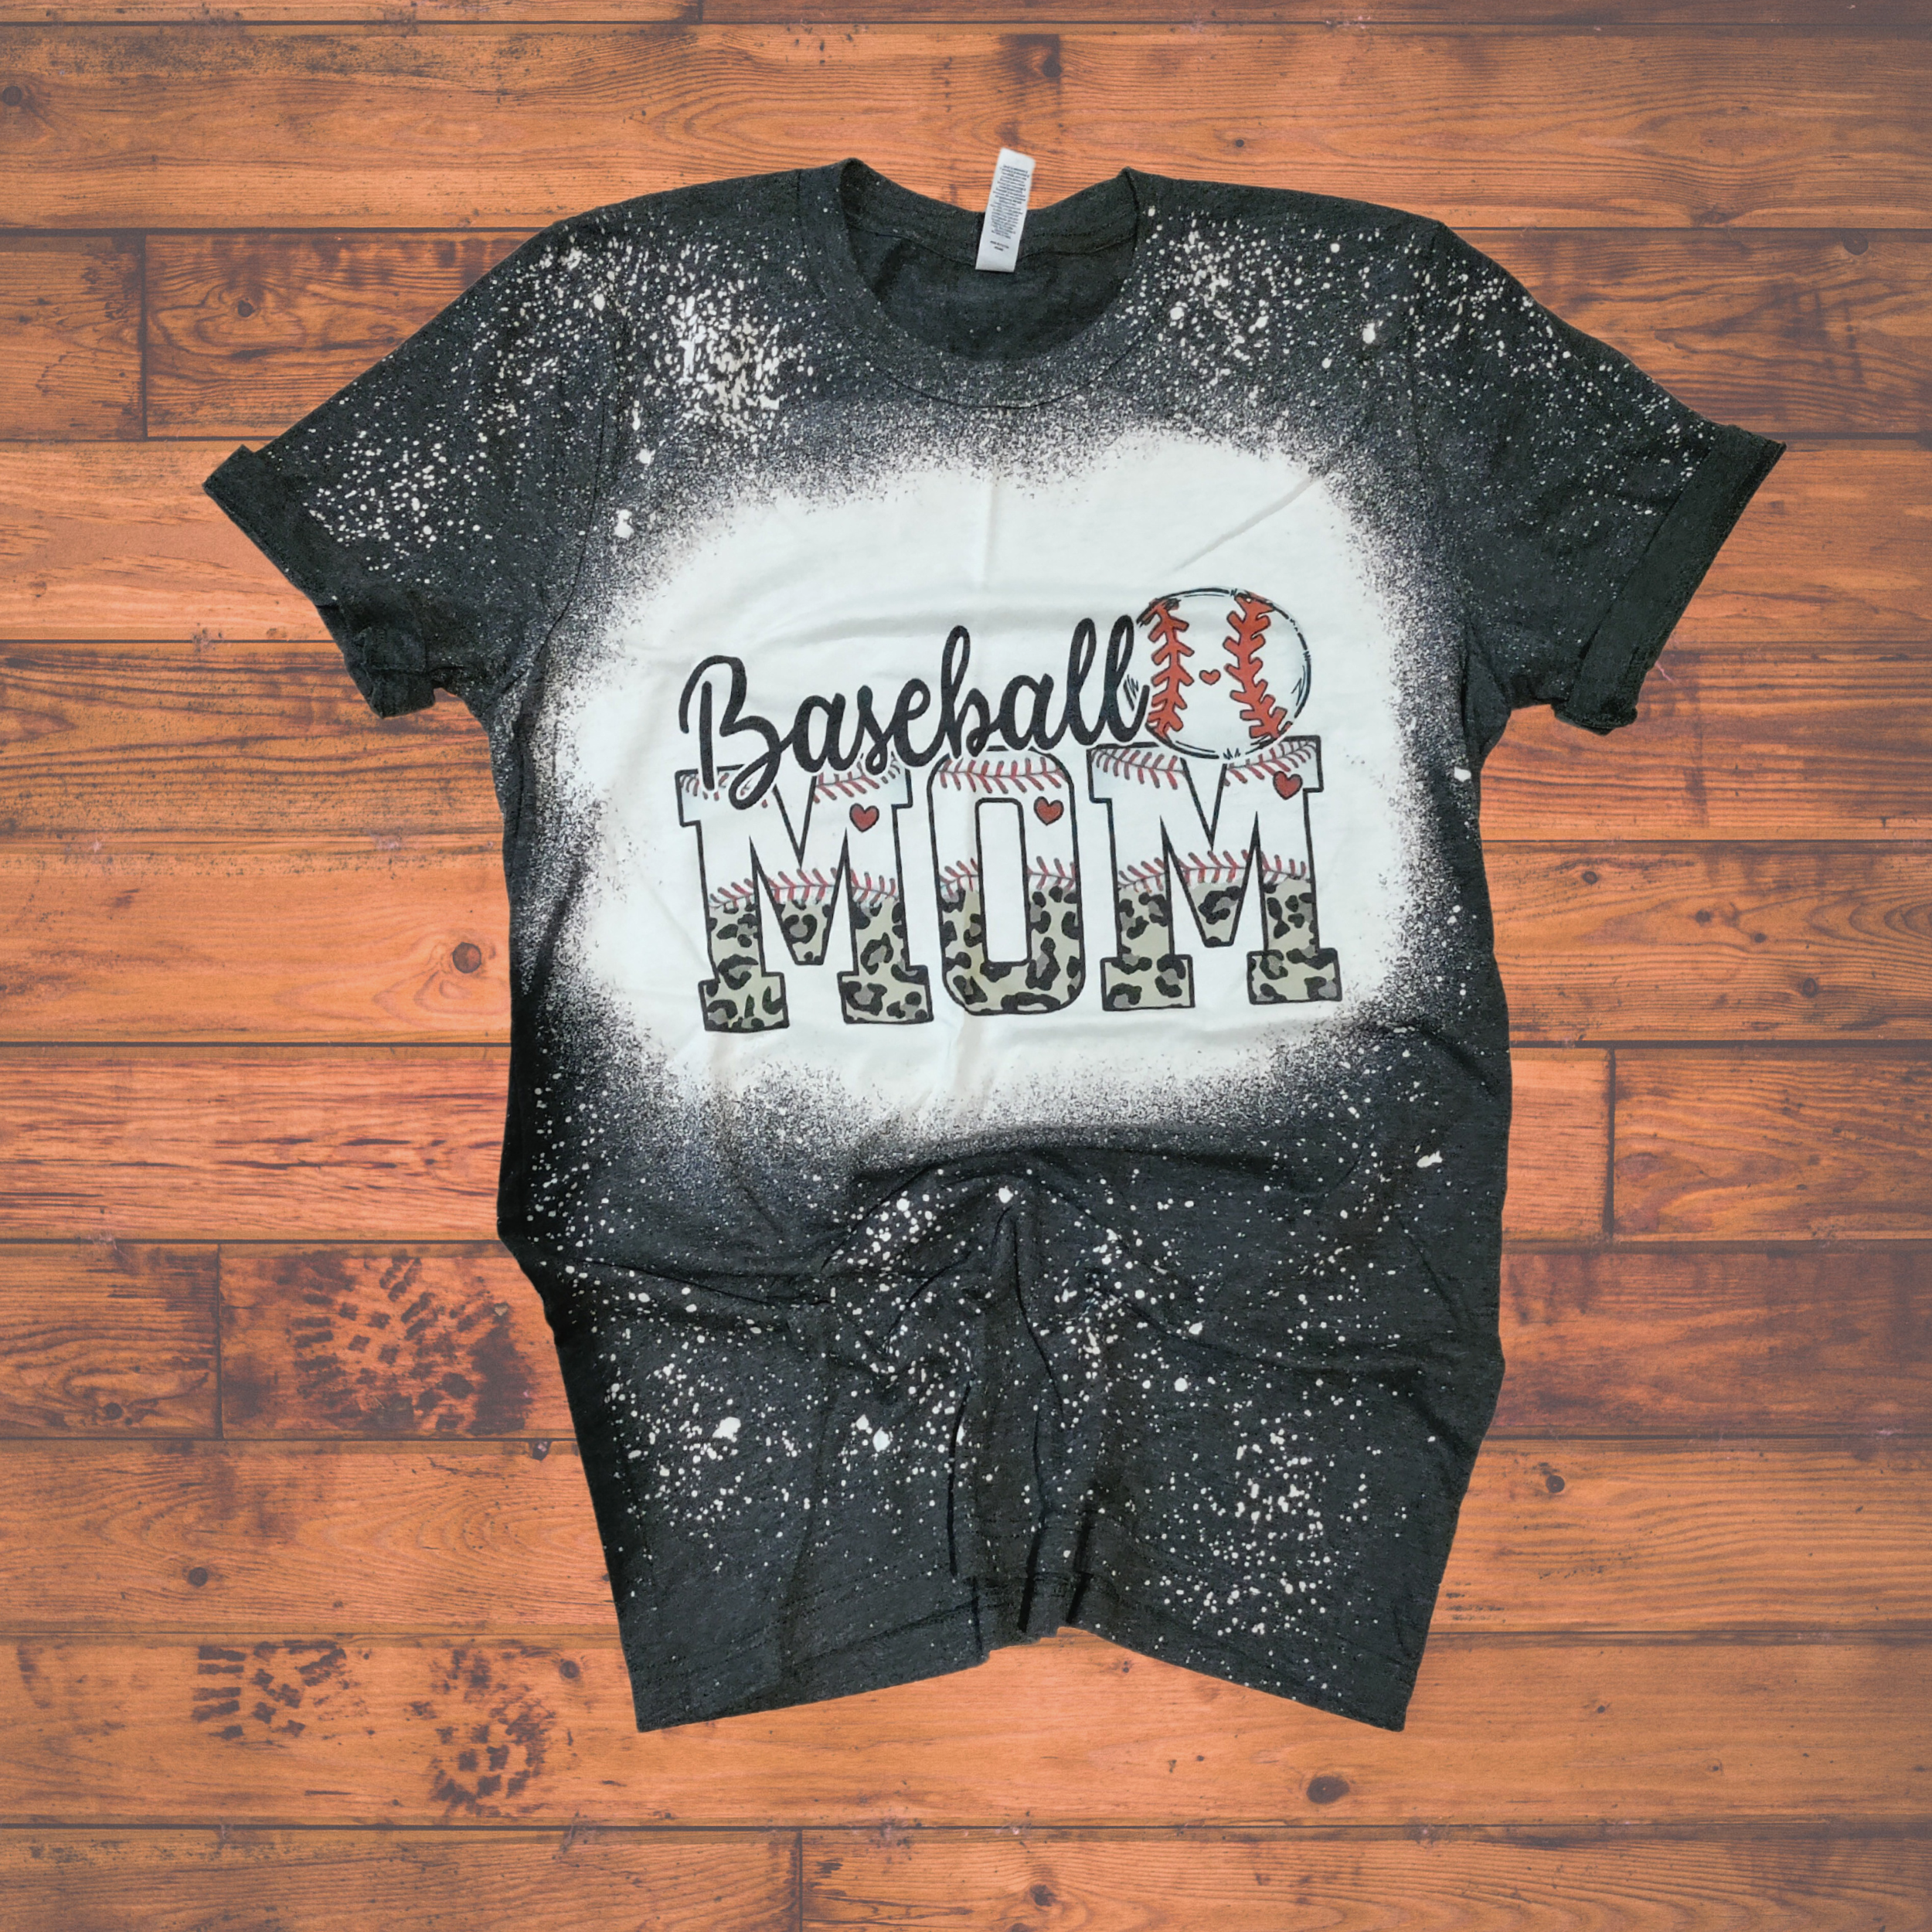 glitter baseball mom shirts